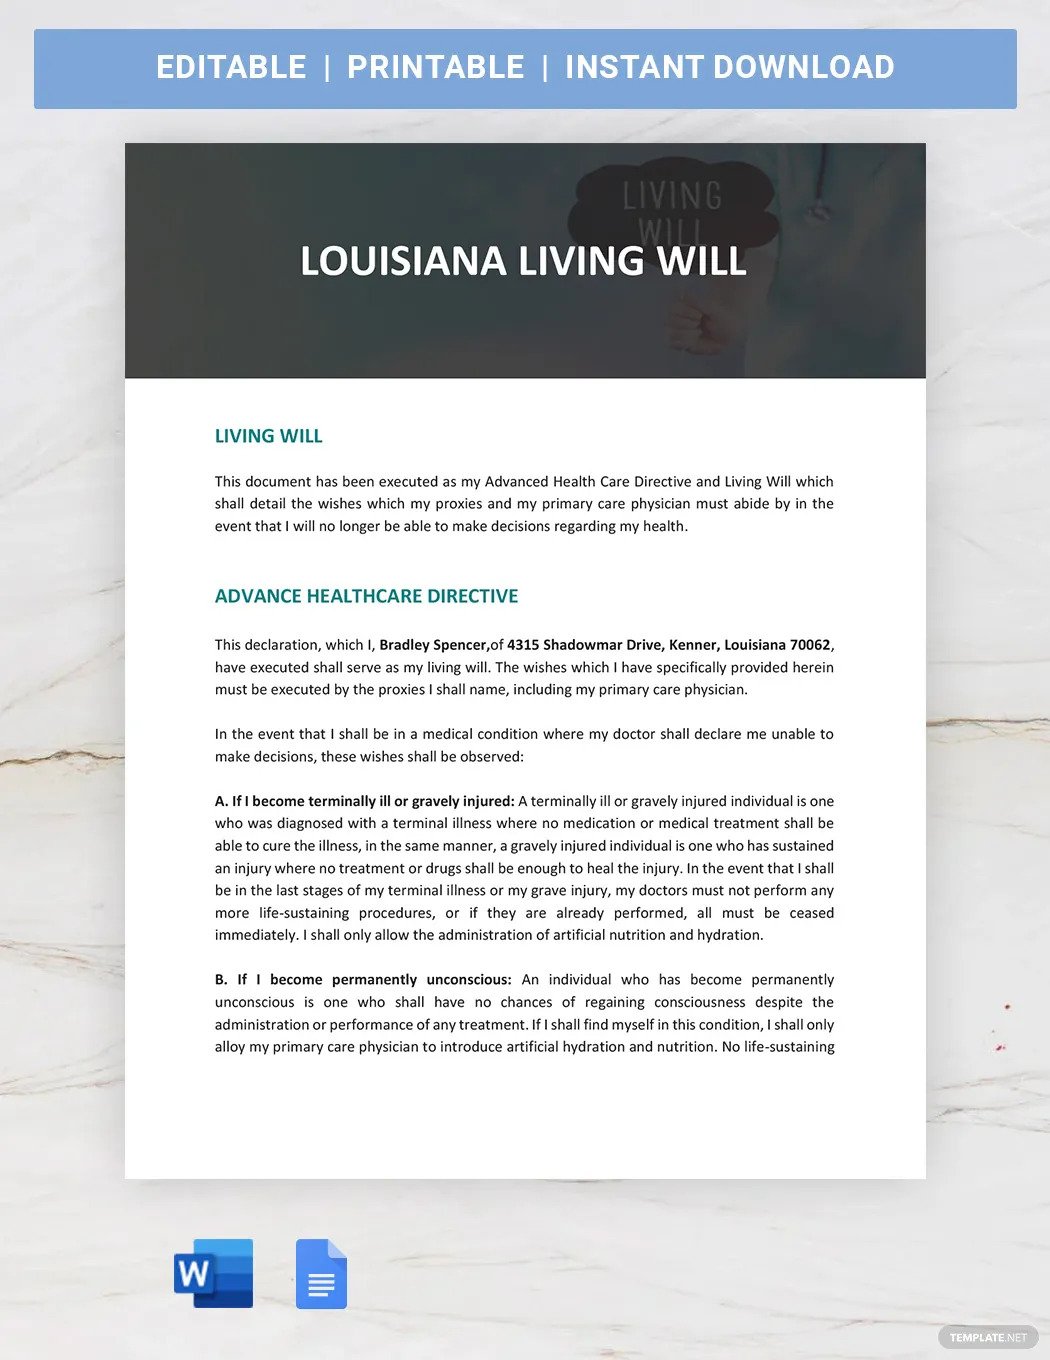 louisiana-living-will-ideas-and-examples